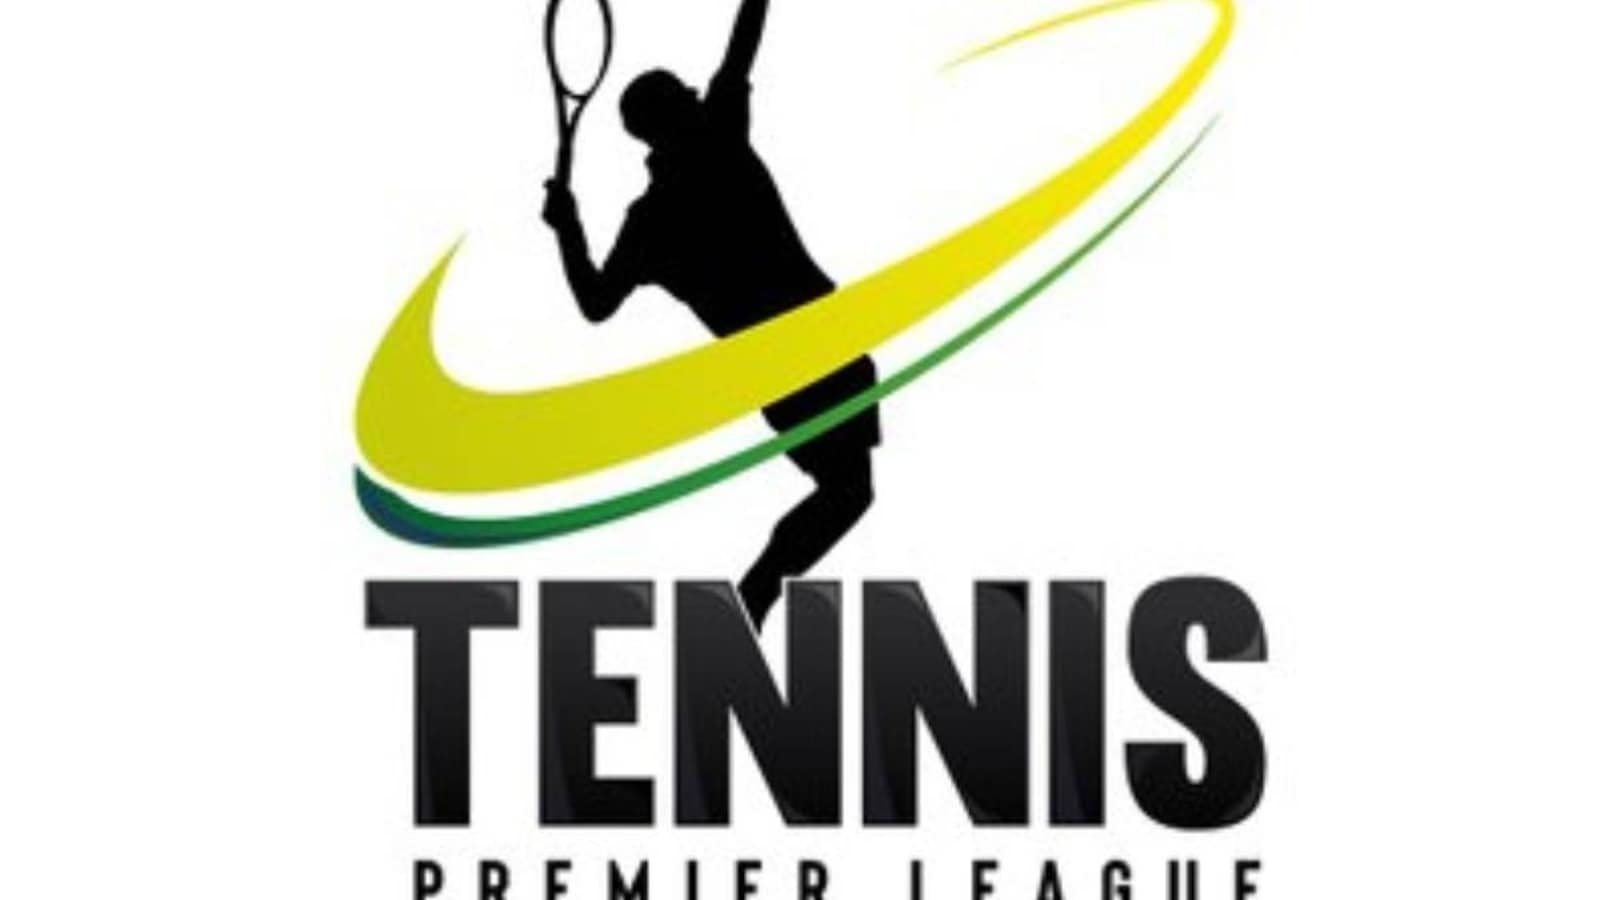 Fourth season of Tennis Premier League kicks off in Pune | Tennis News ...